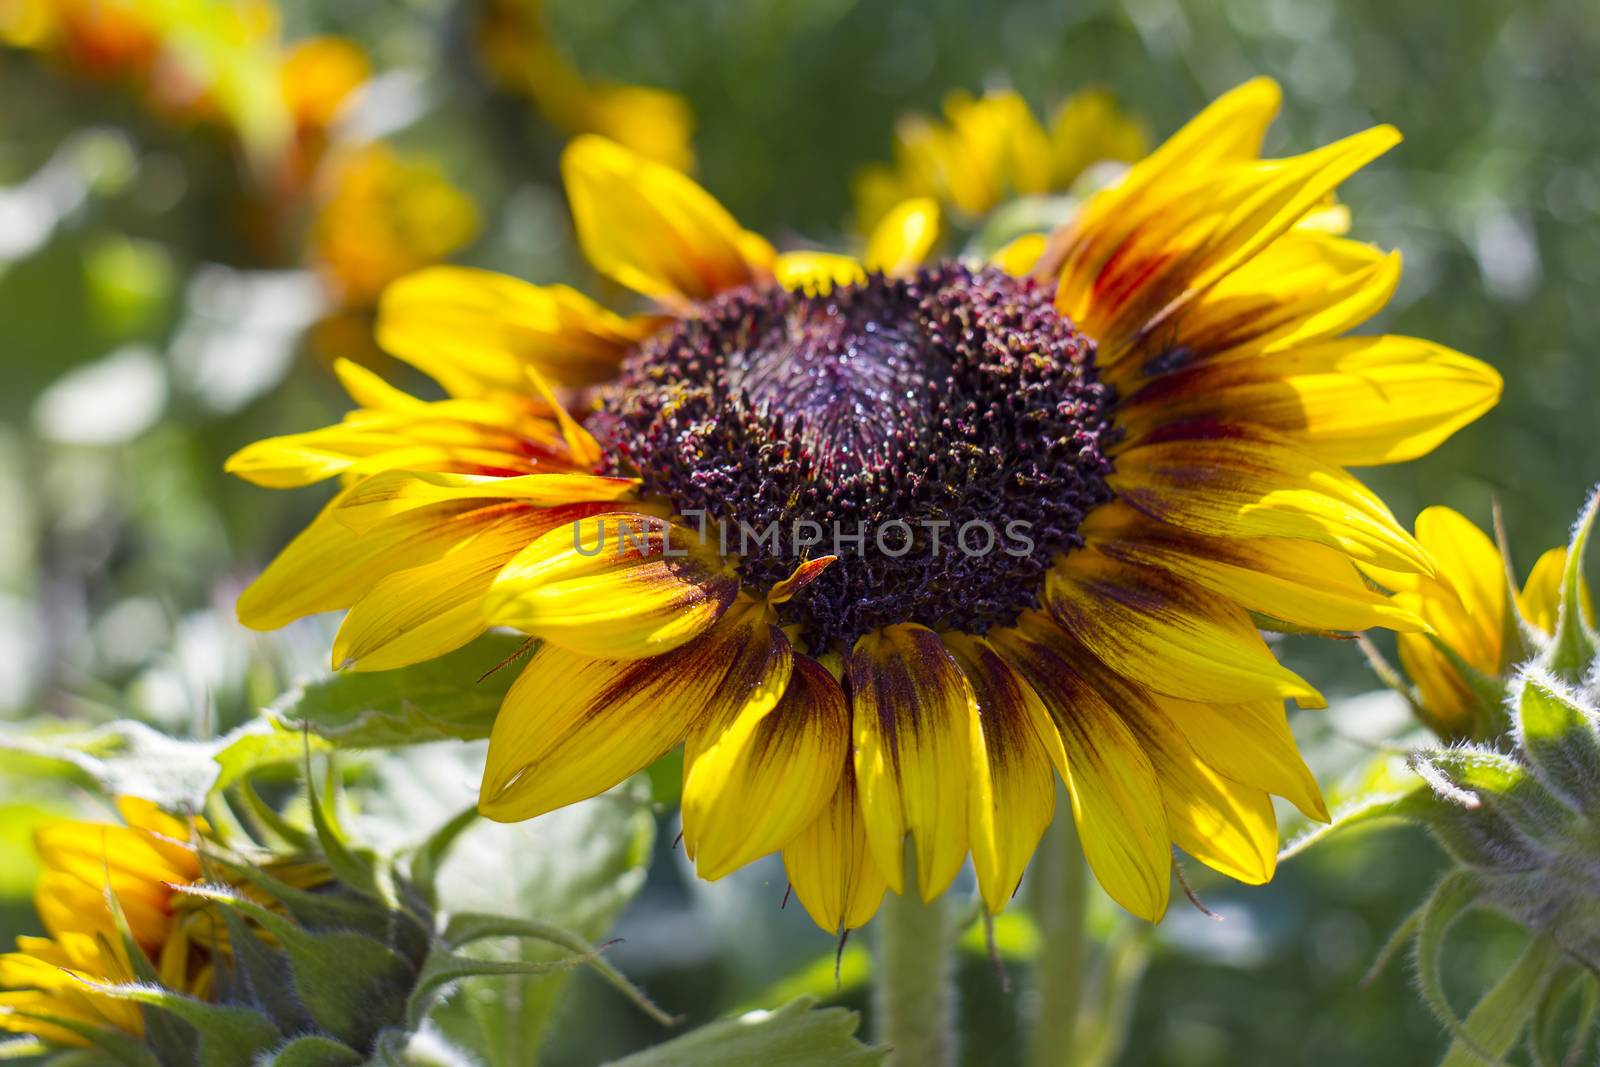 sunflowers in the garden (Helianthus)